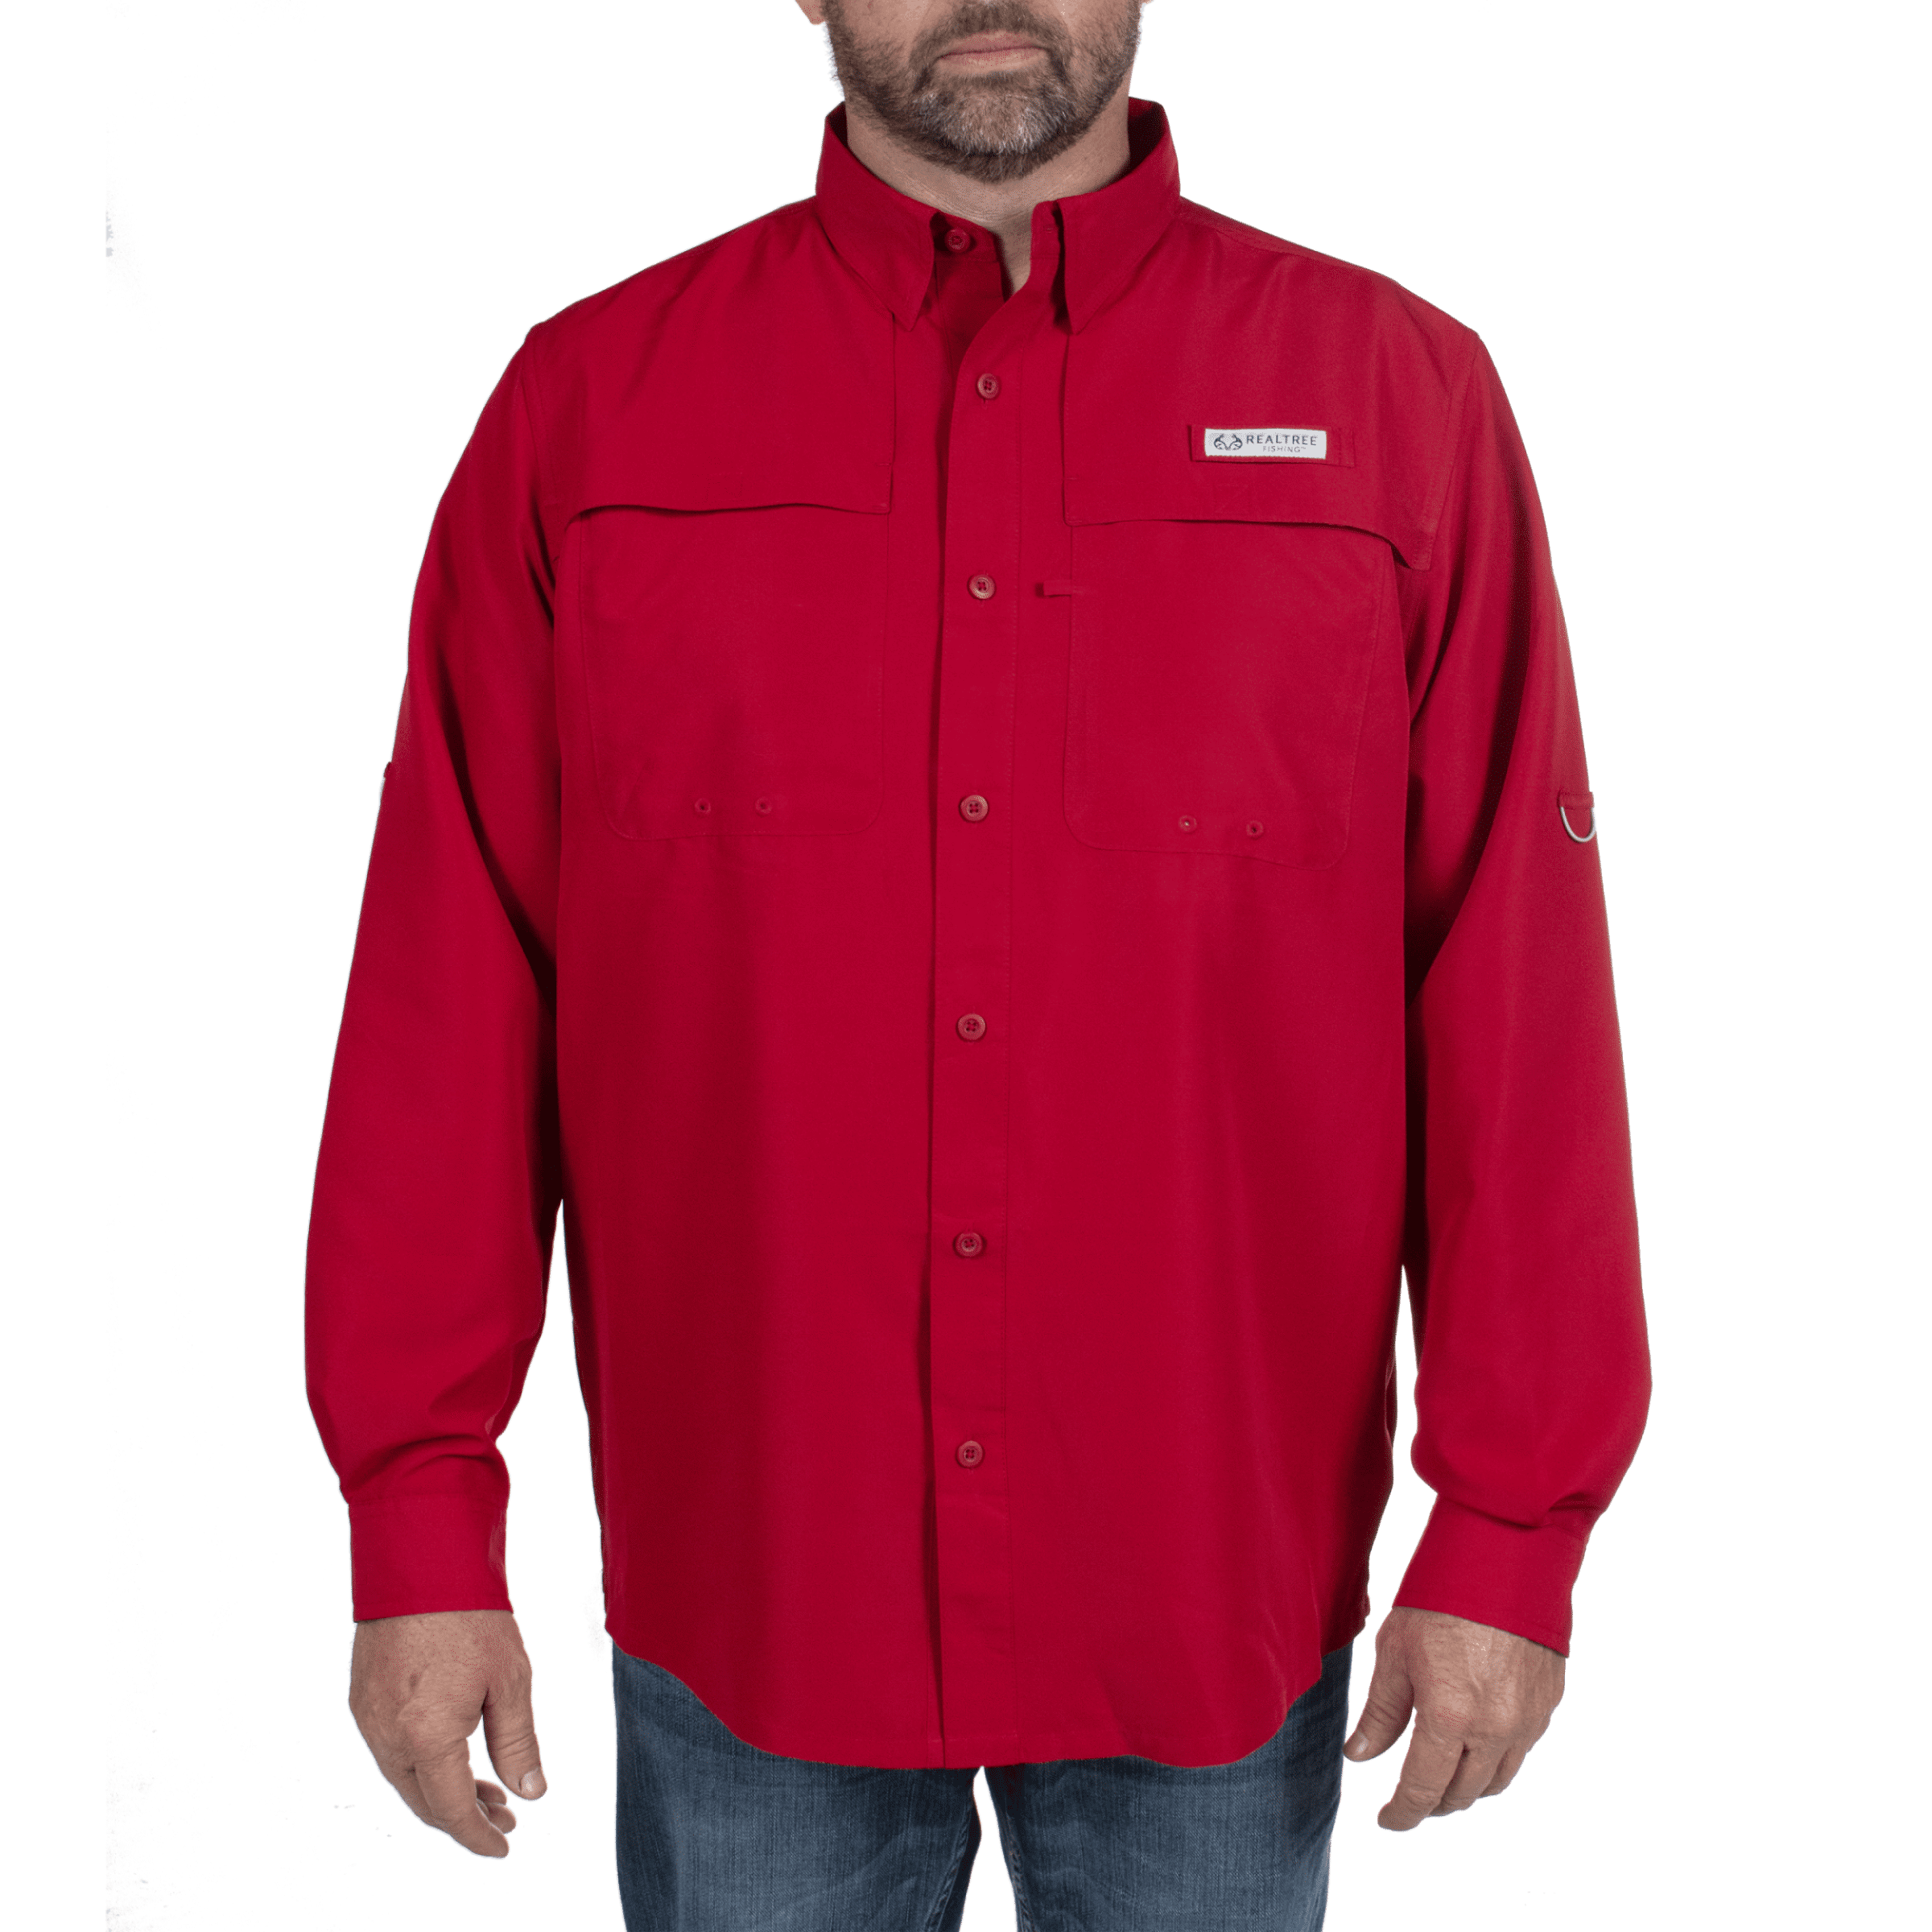 American Outdoorsman Men’s Long-Sleeve Fishing Shirt Blackfoot River Moisture-Wicking Button-Up Clothes/Apparel 